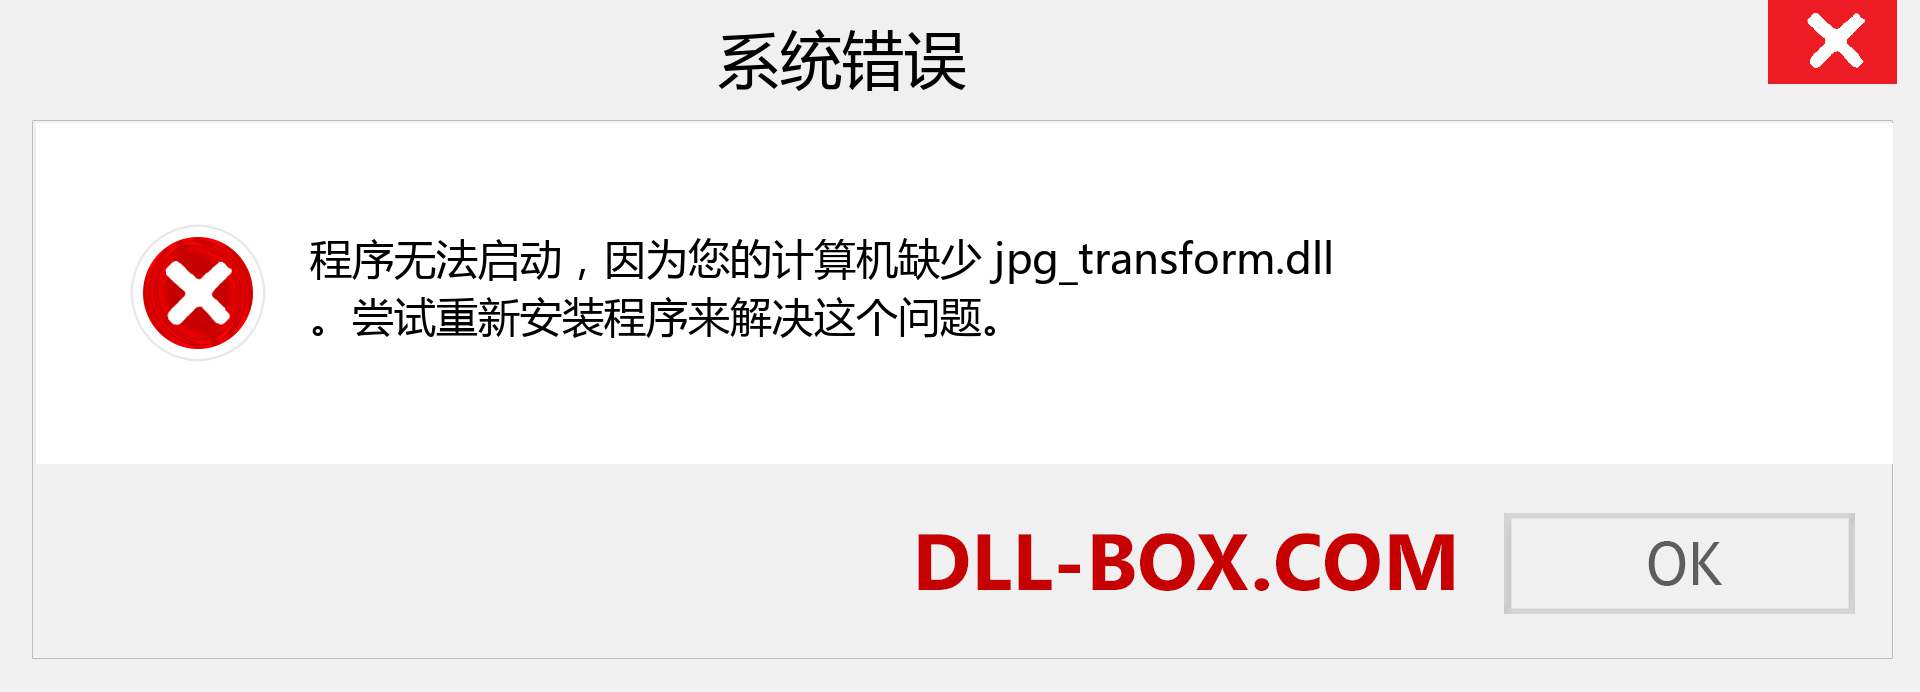 jpg_transform.dll 文件丢失？。 适用于 Windows 7、8、10 的下载 - 修复 Windows、照片、图像上的 jpg_transform dll 丢失错误